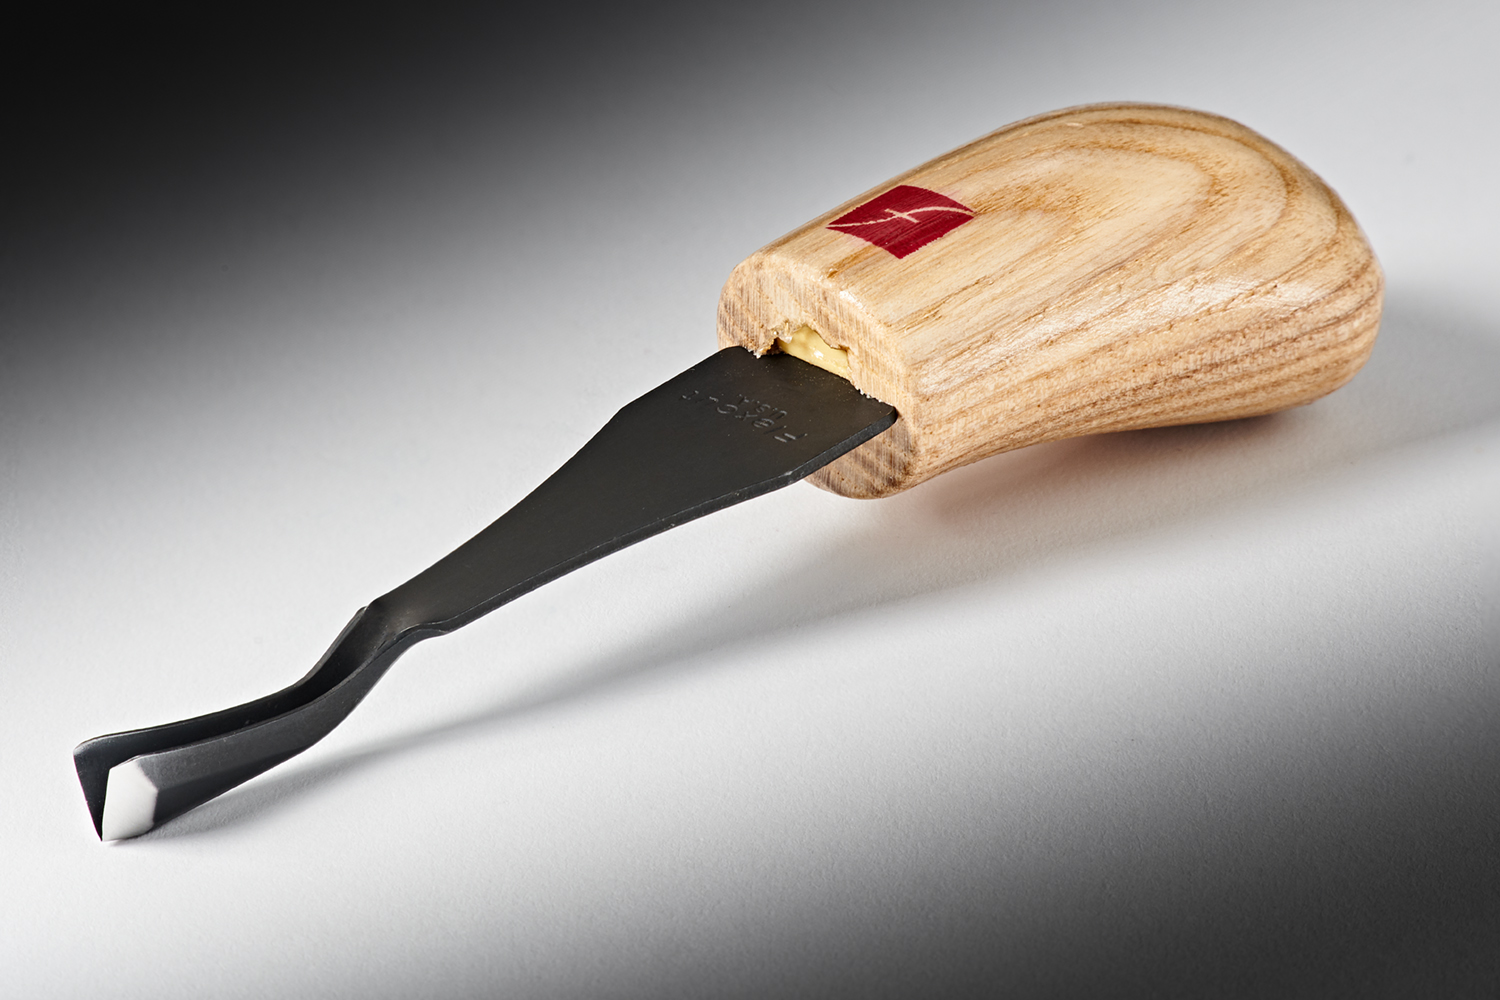 flexcut-spoon-carvin-jack-2-0-flexcut-spoon-carving-knives